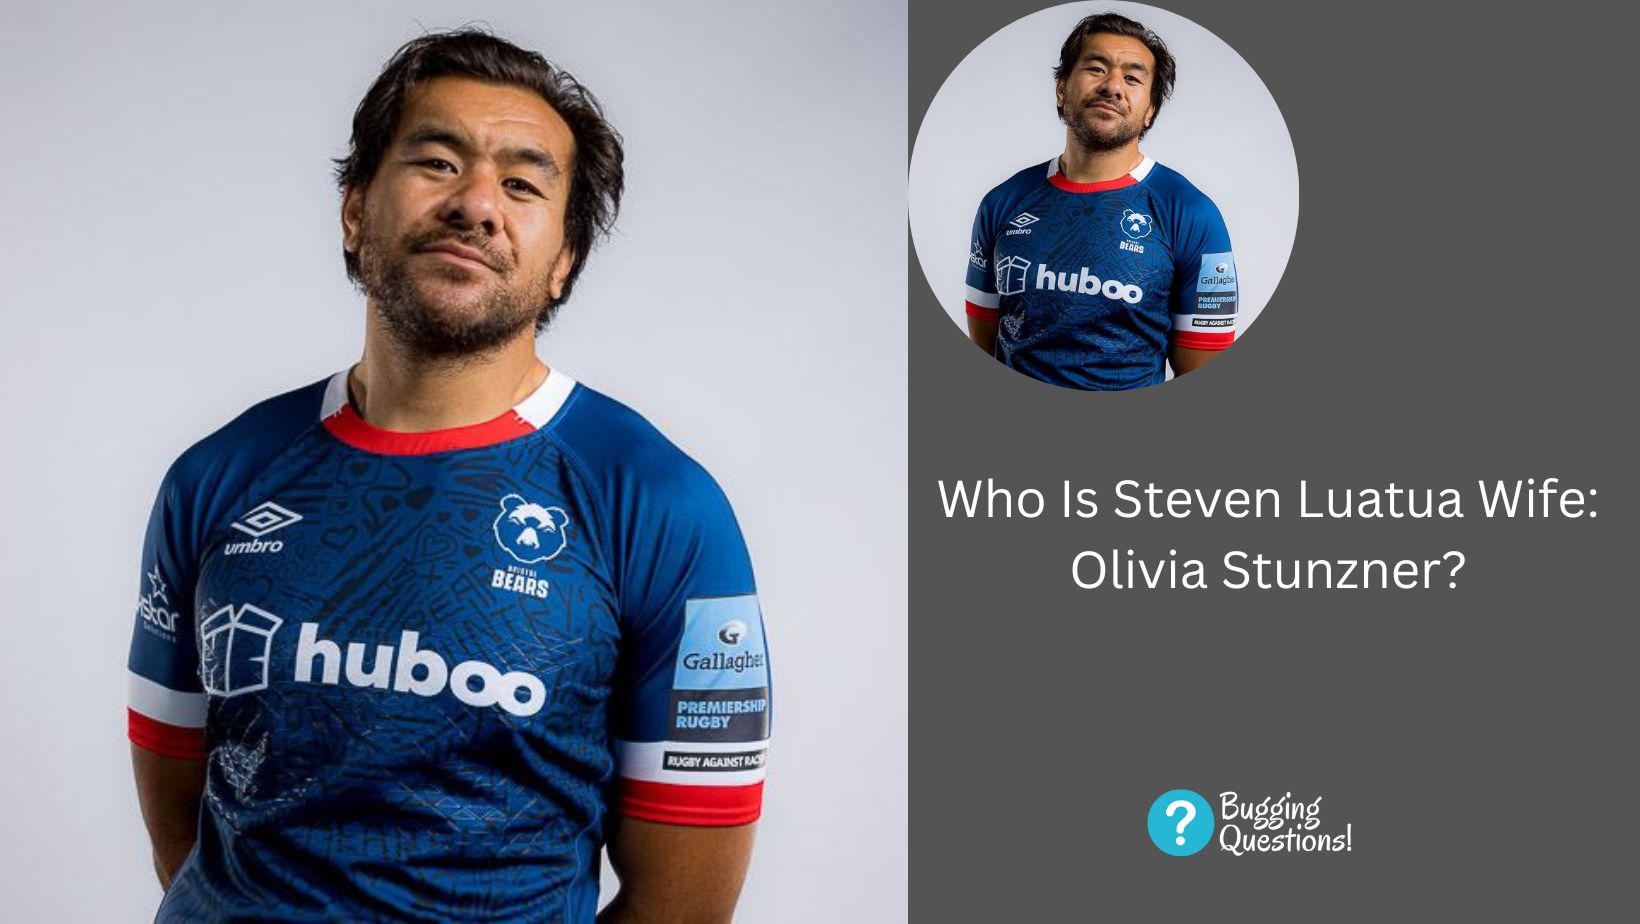 Who Is Steven Luatua Wife: Olivia Stunzner?